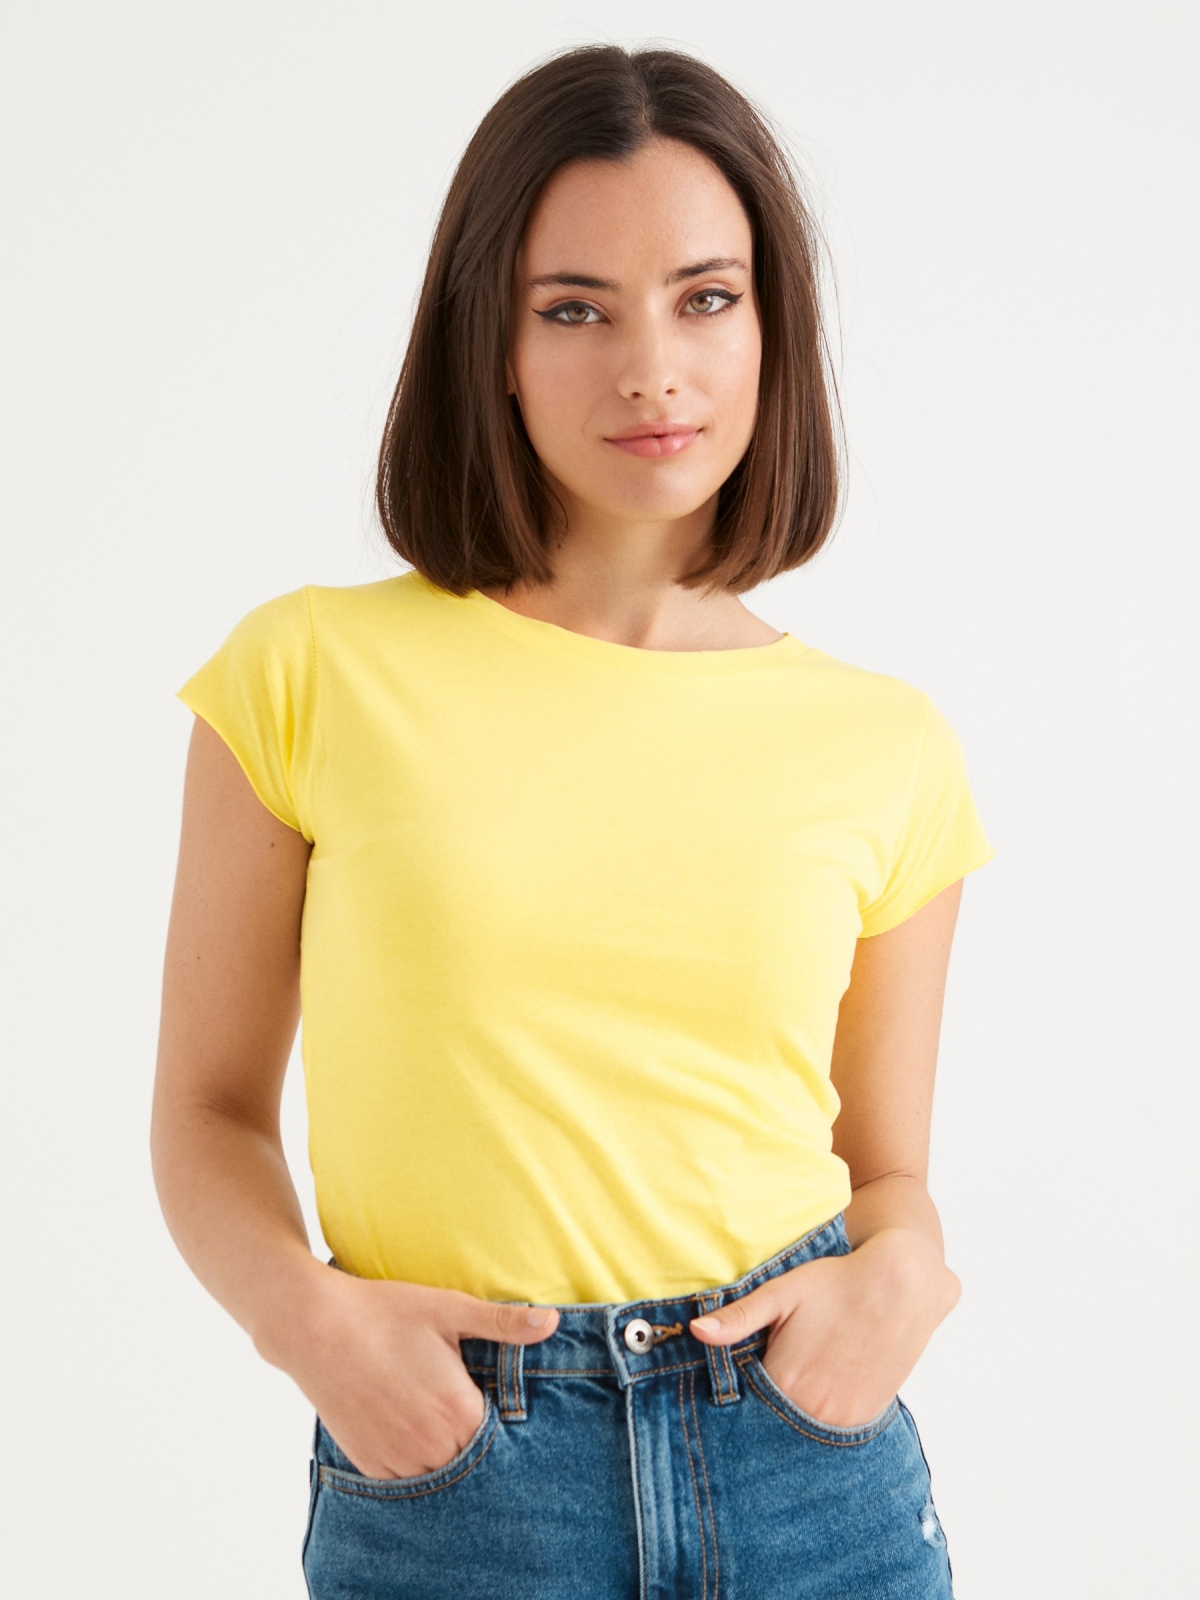 Camiseta básica cuello redondo amarillo vista media frontal